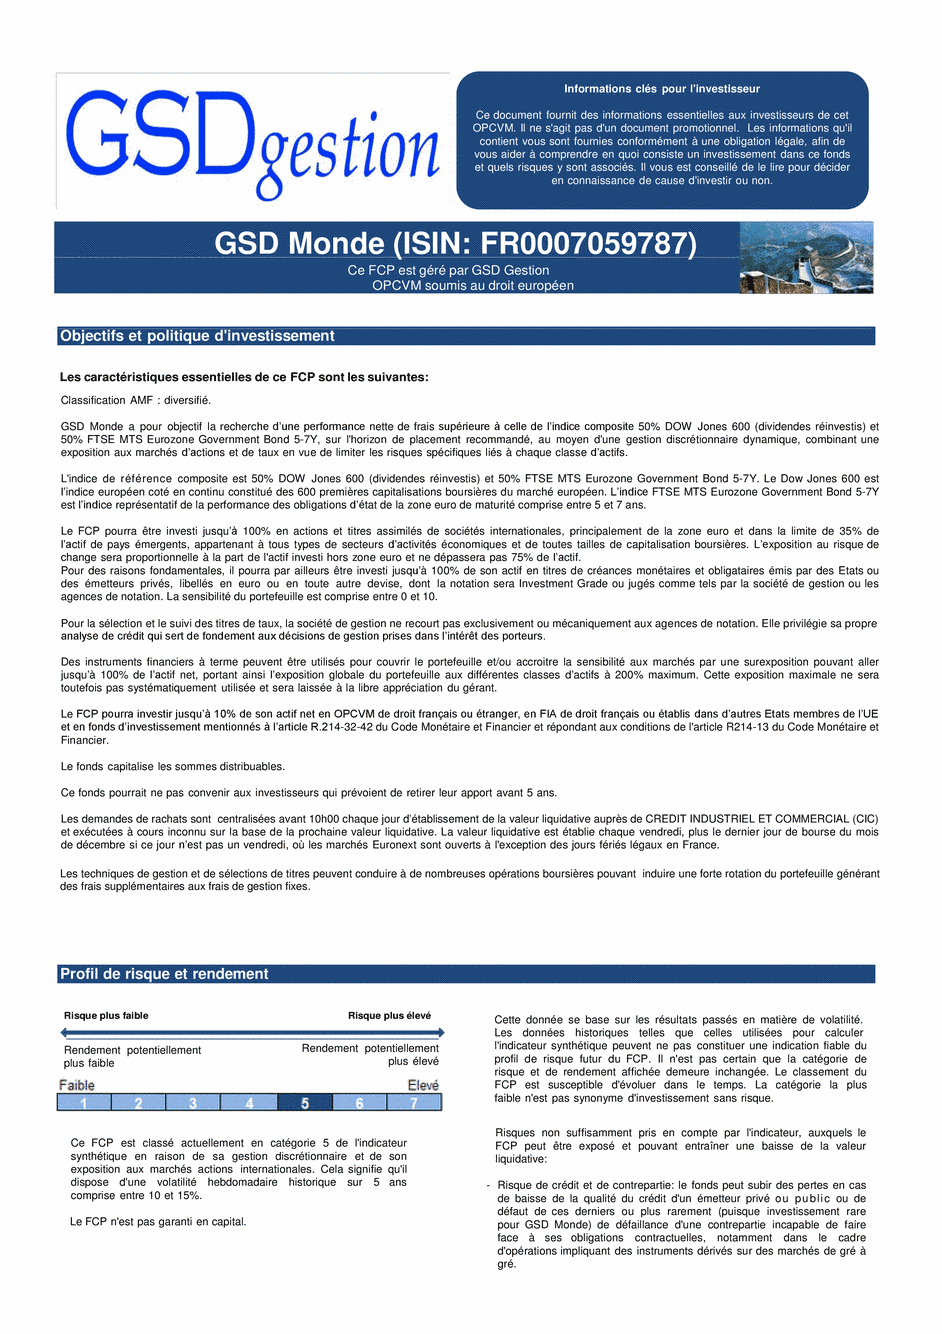 DICI-Prospectus GSD Monde - 17/06/2016 - French